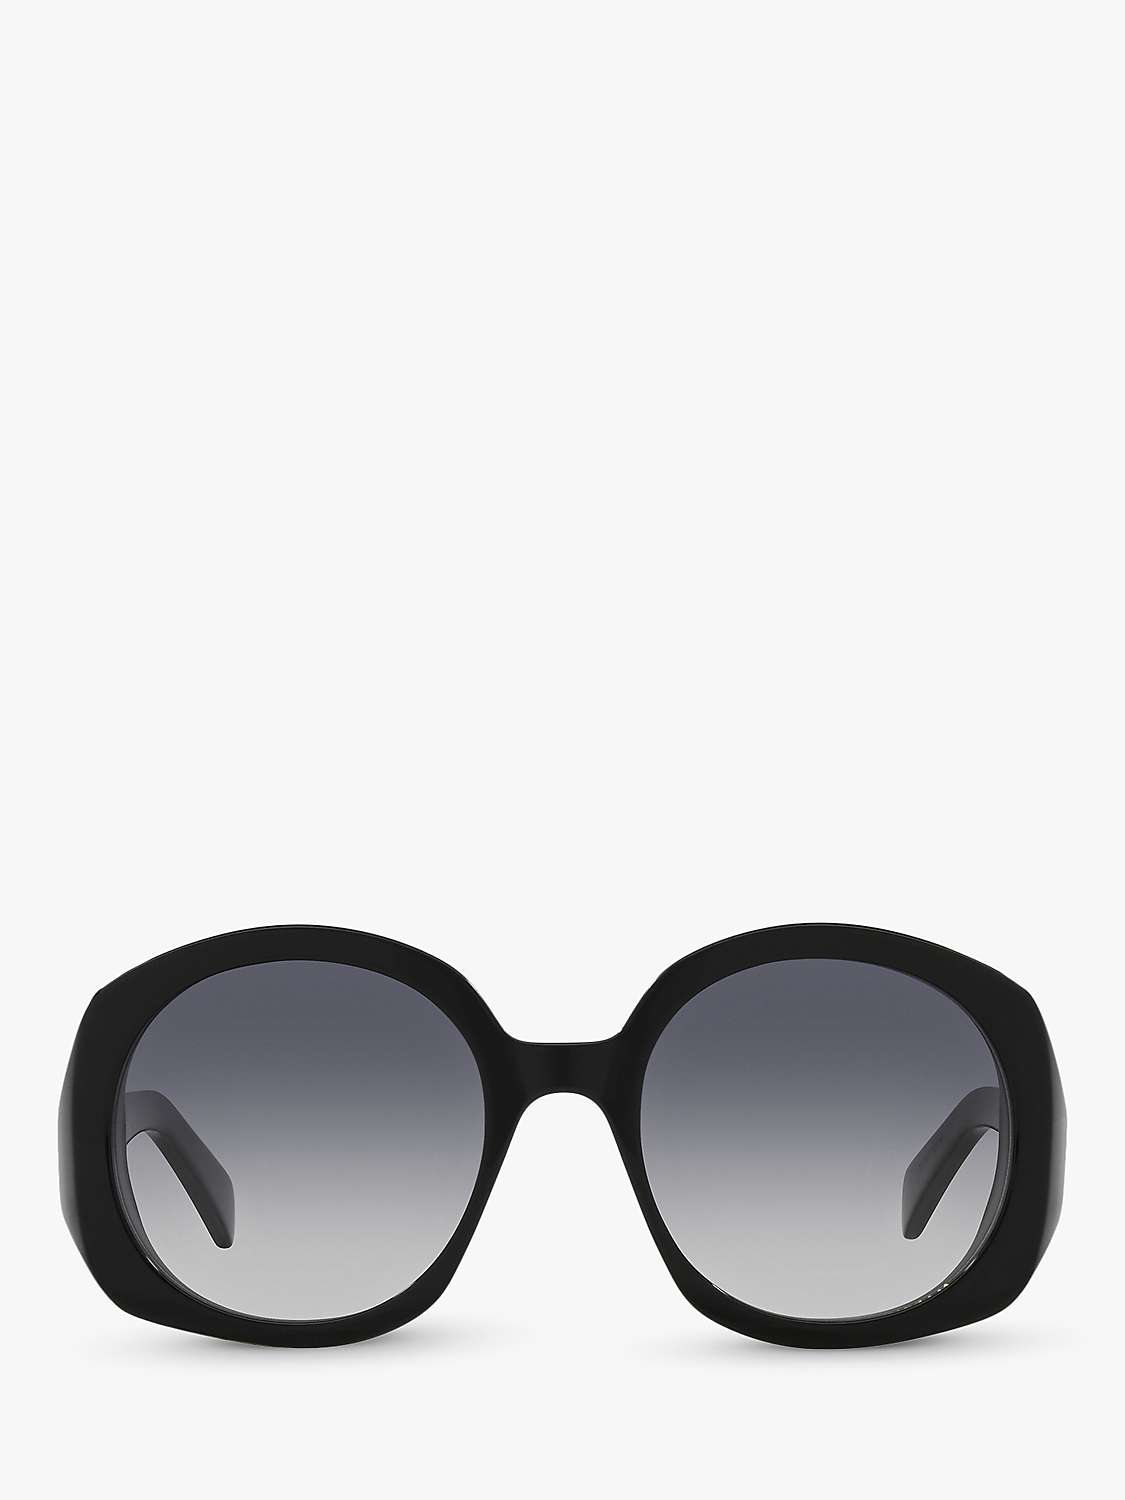 Buy Celine CL000378 Women's Round Sunglasses, Black Online at johnlewis.com